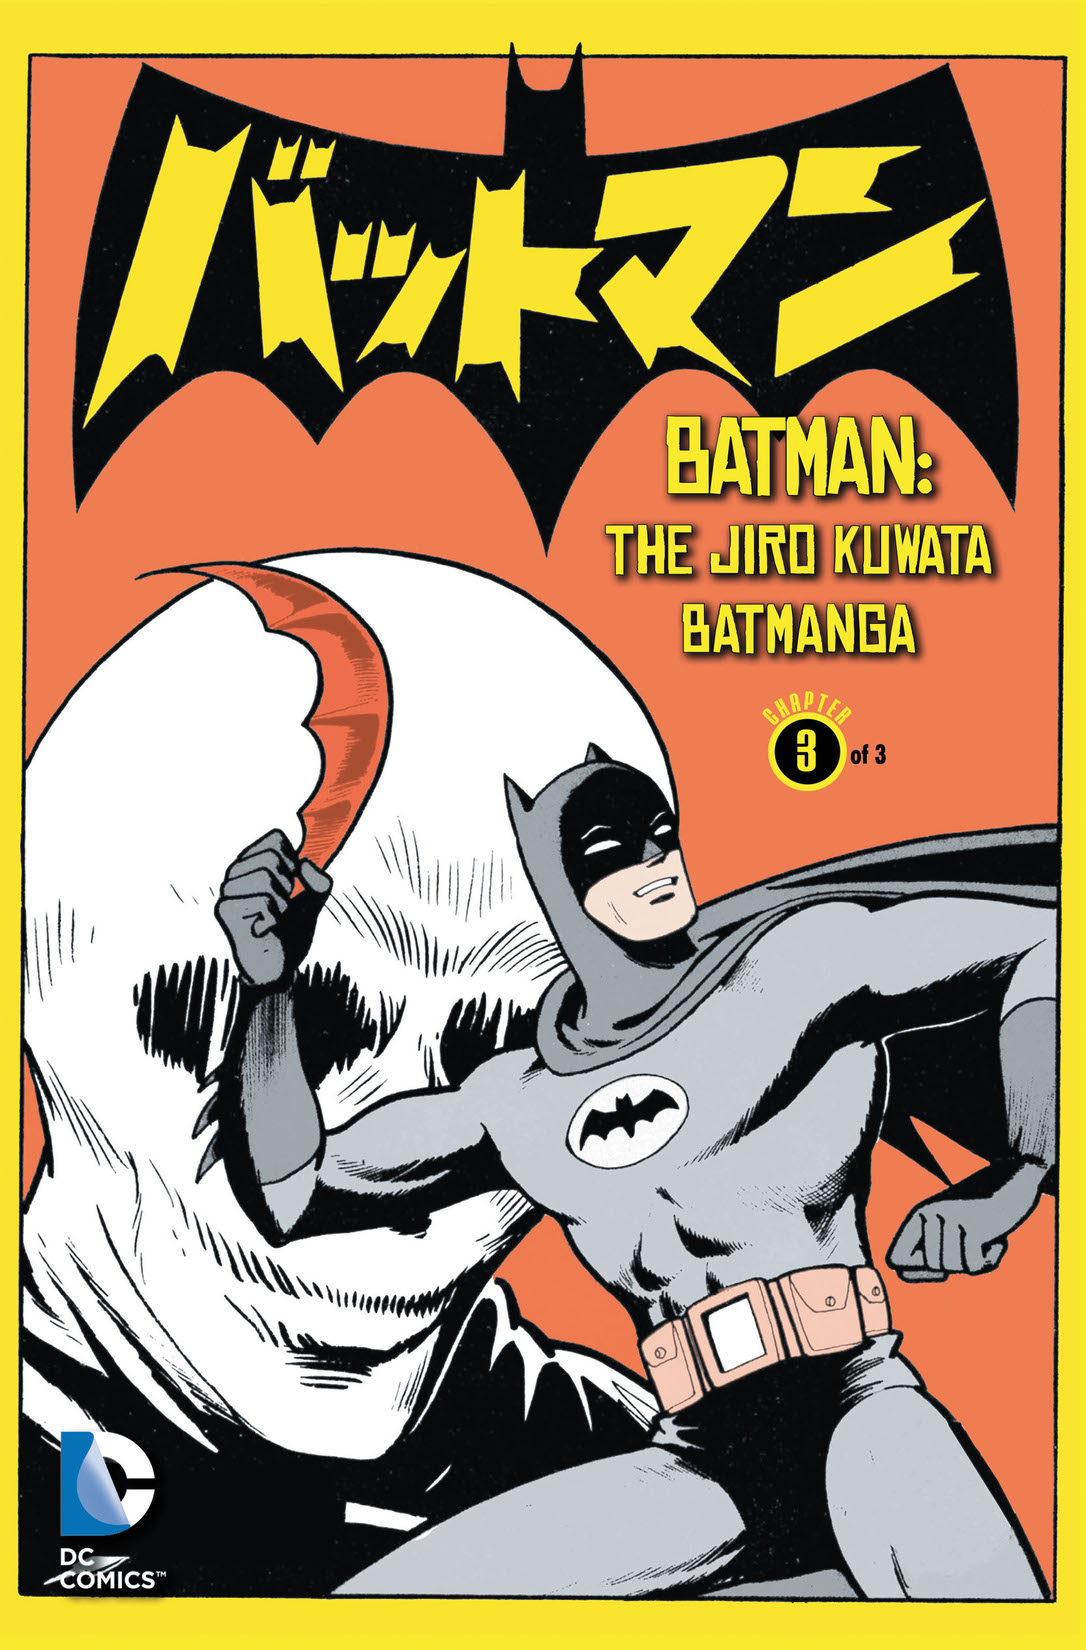 Batman: The Jiro Kuwata Batmanga #3 preview images